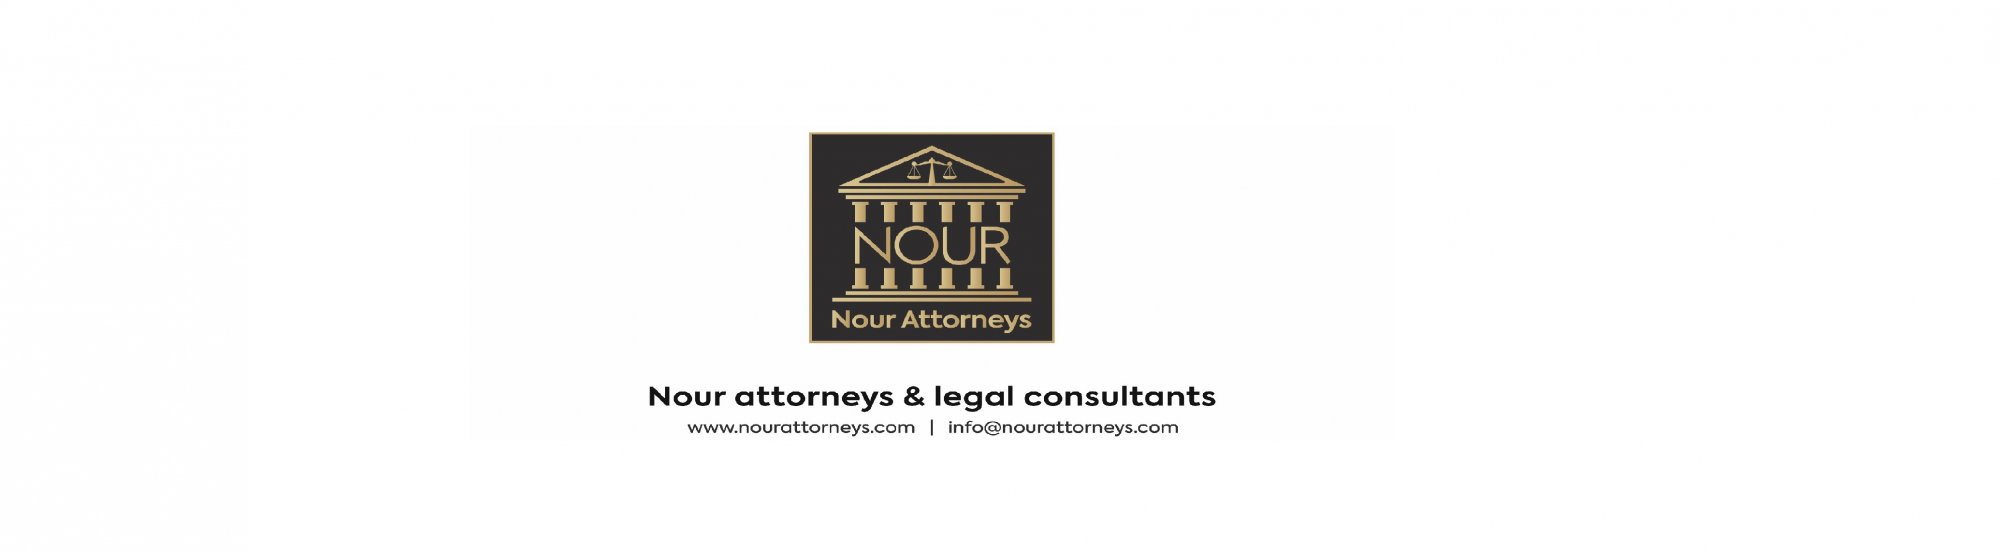 Nour Attorneys & Legal Consultants cover photo